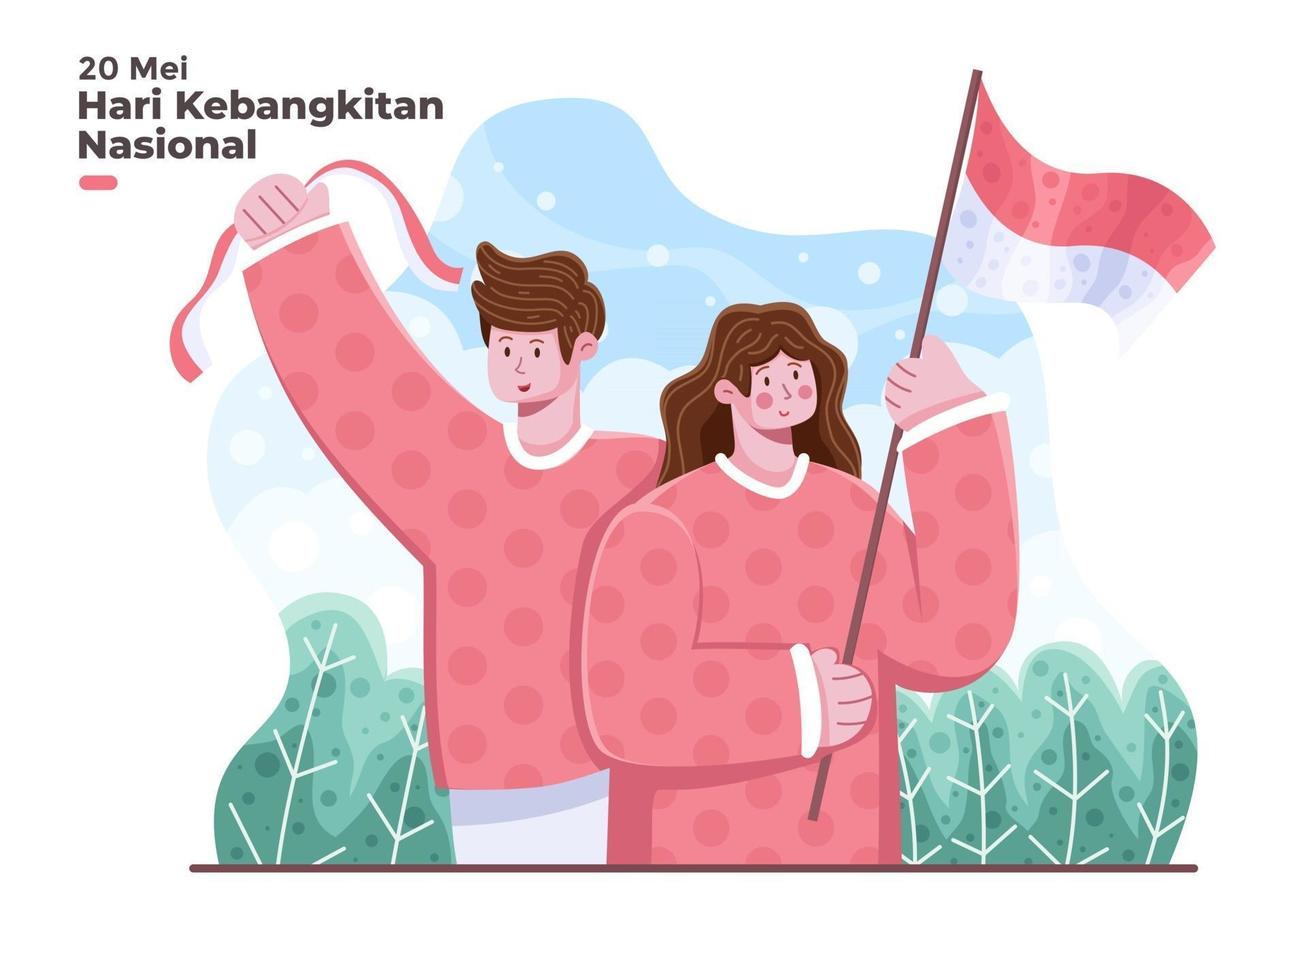 hari kebangkitan nasional indonésie 20 mei illustration traduire indonésie jour de réveil national 20 mai illustration indépendance indonésienne et jour de réveil célébration illustration plat vecteur